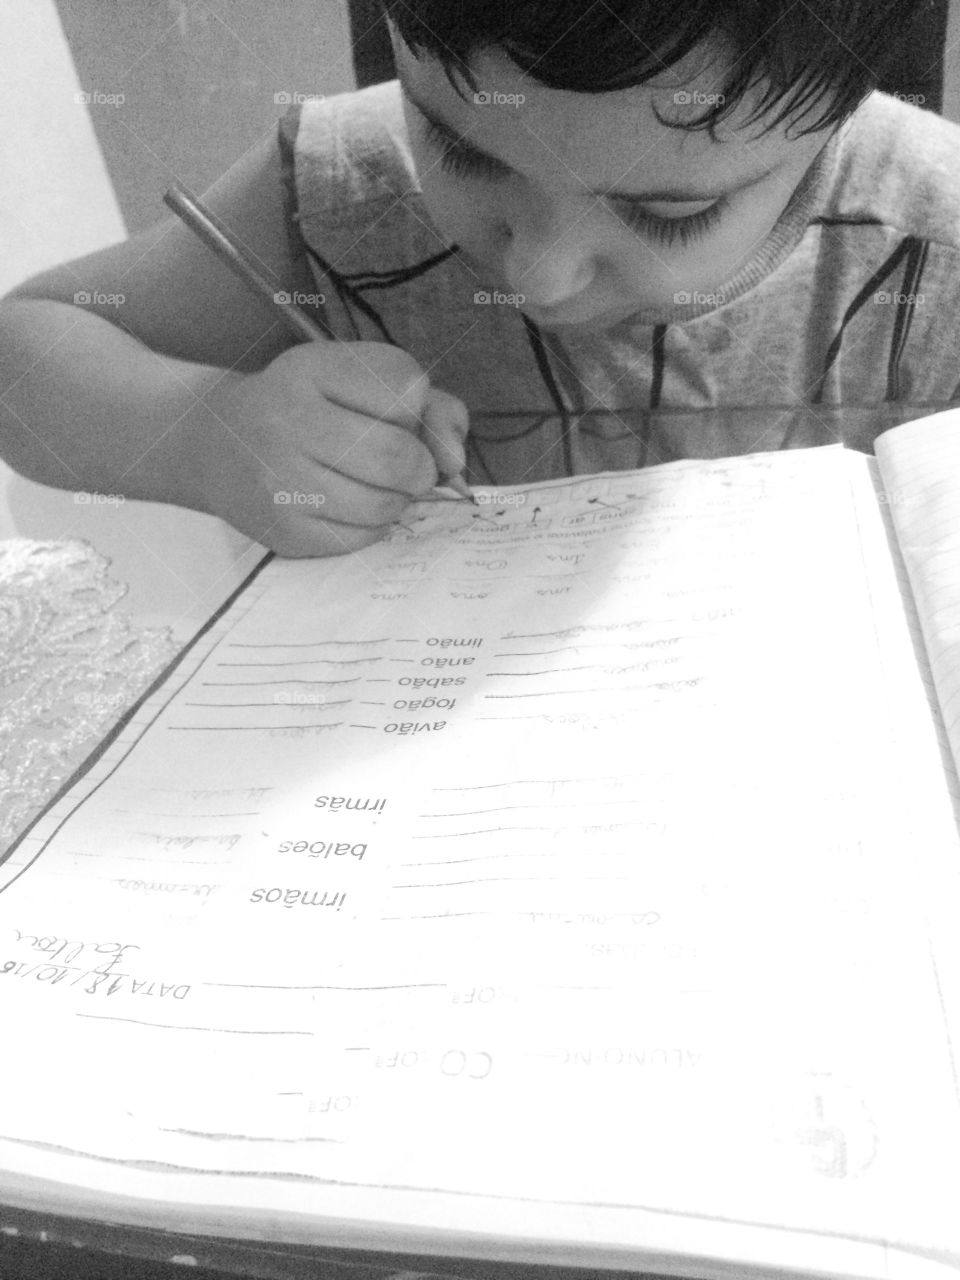 A little boy doing his homework at home